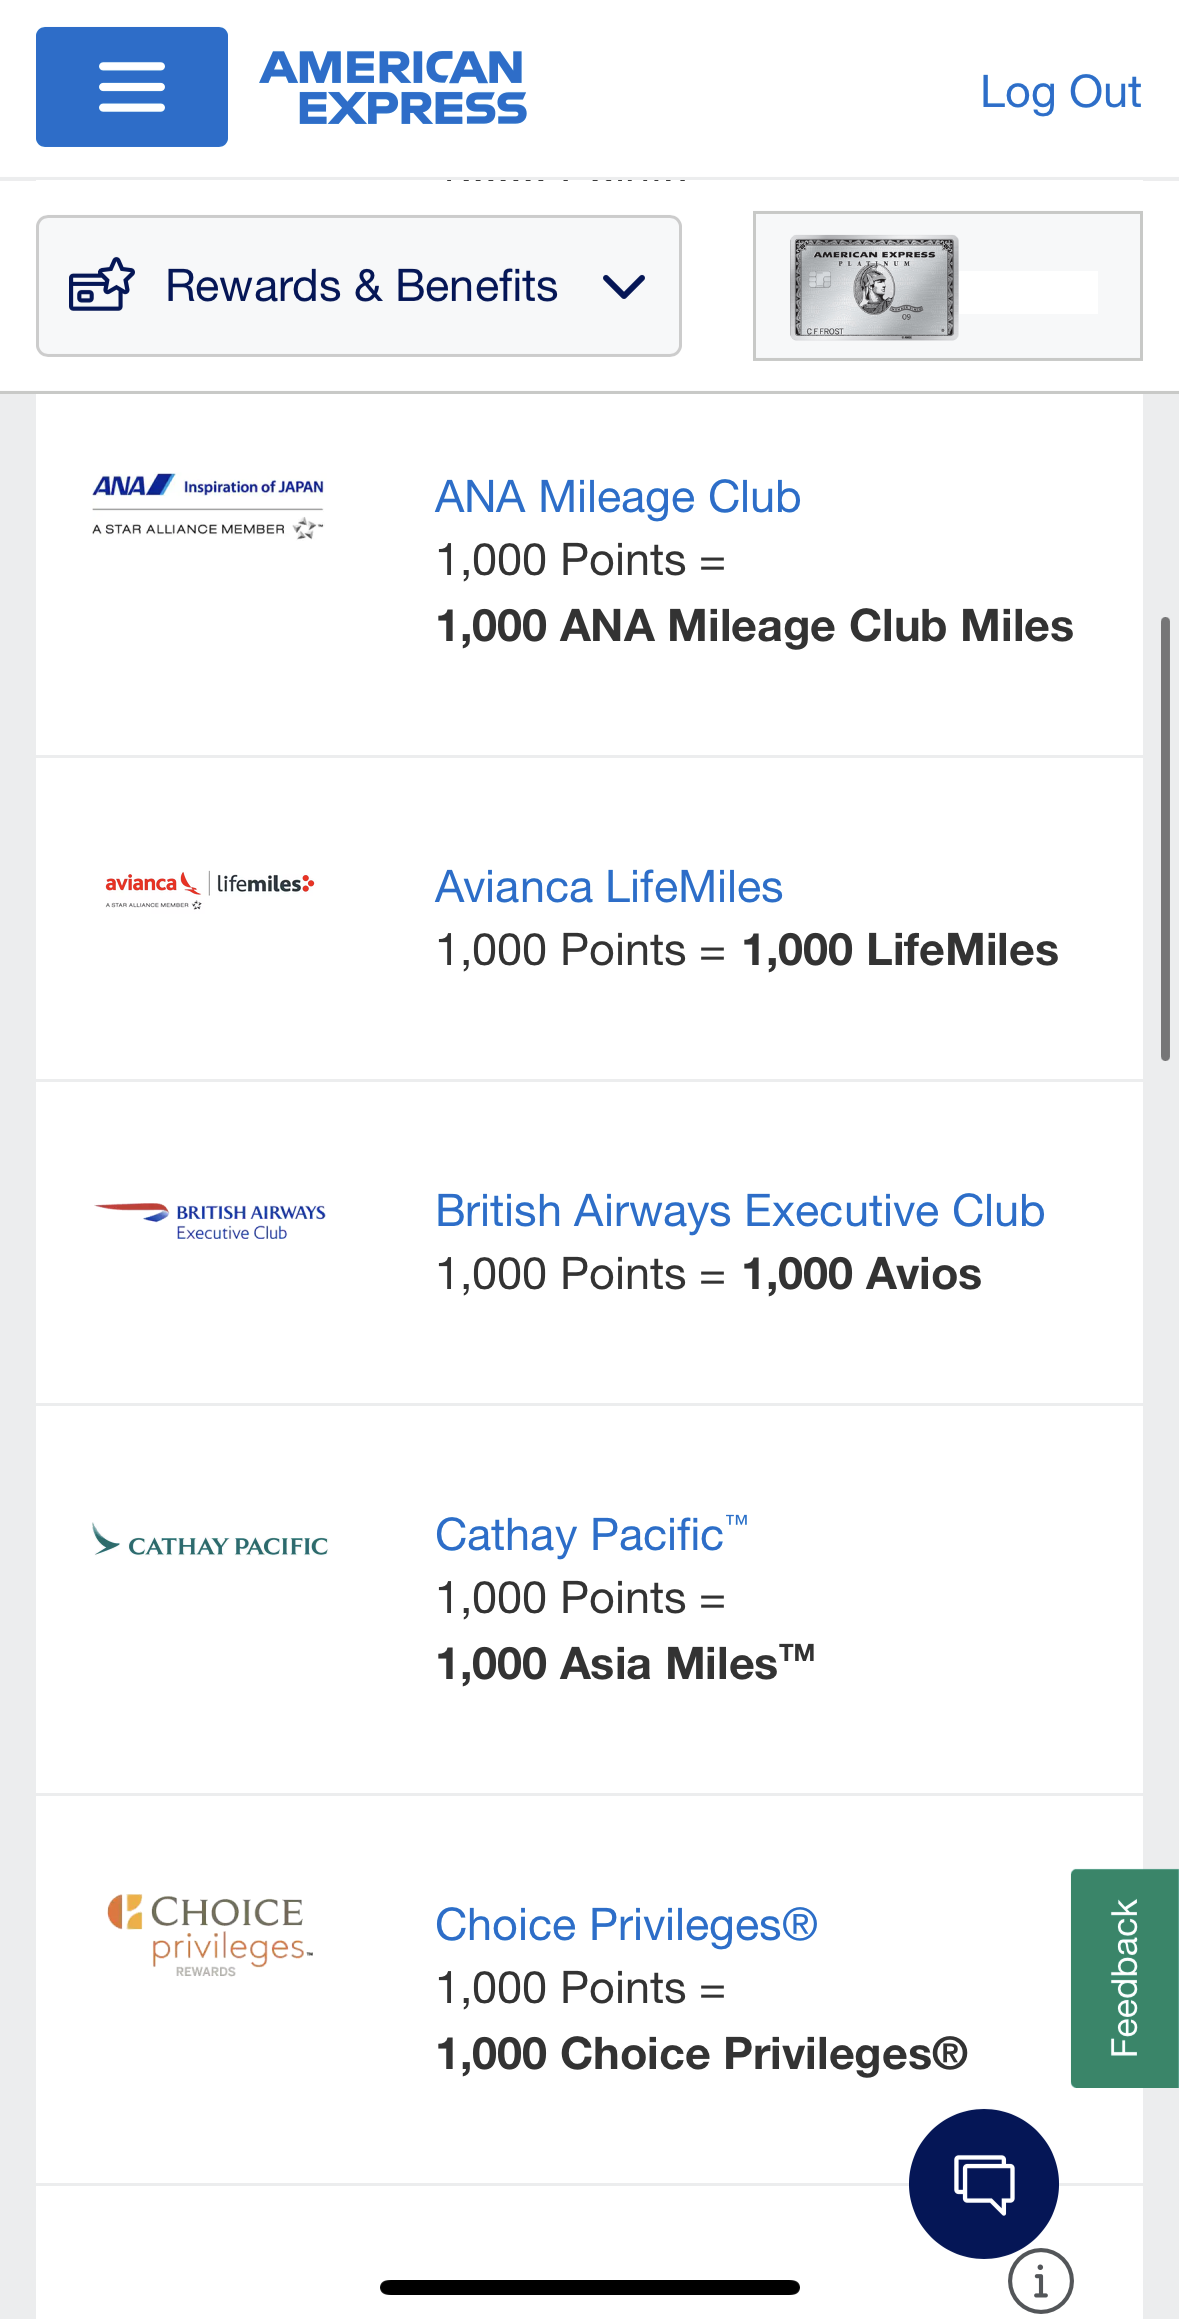 Amex Platinum travel partners